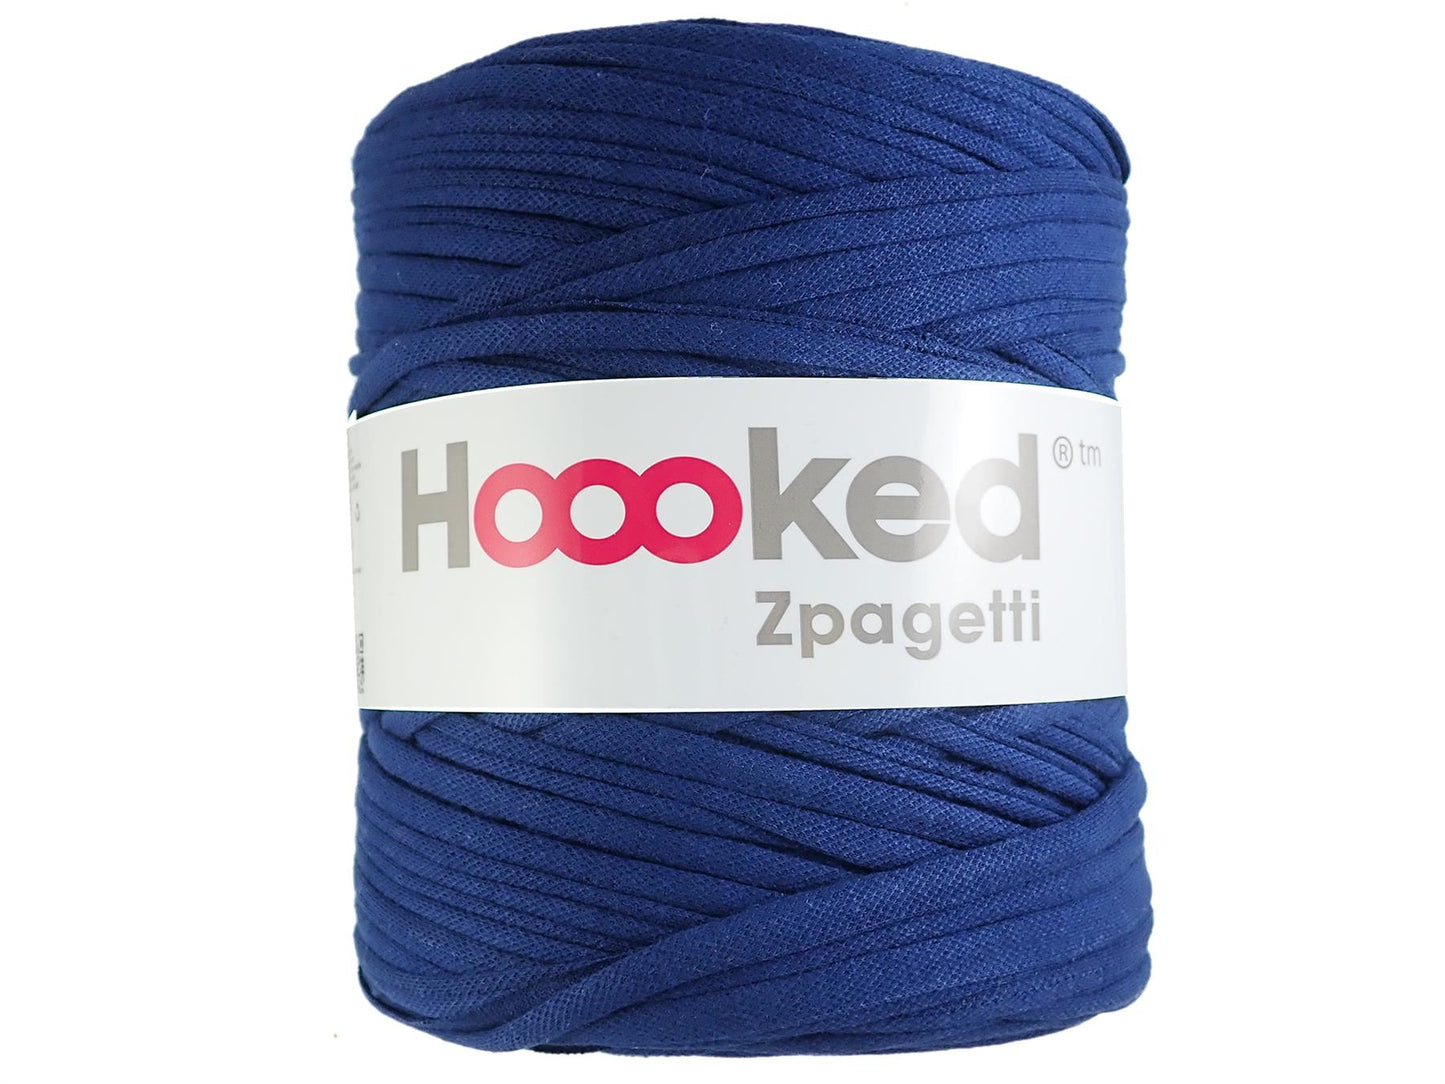 Hoooked Zpagetti Dark Blue Cotton T-Shirt Yarn - 120M 700g